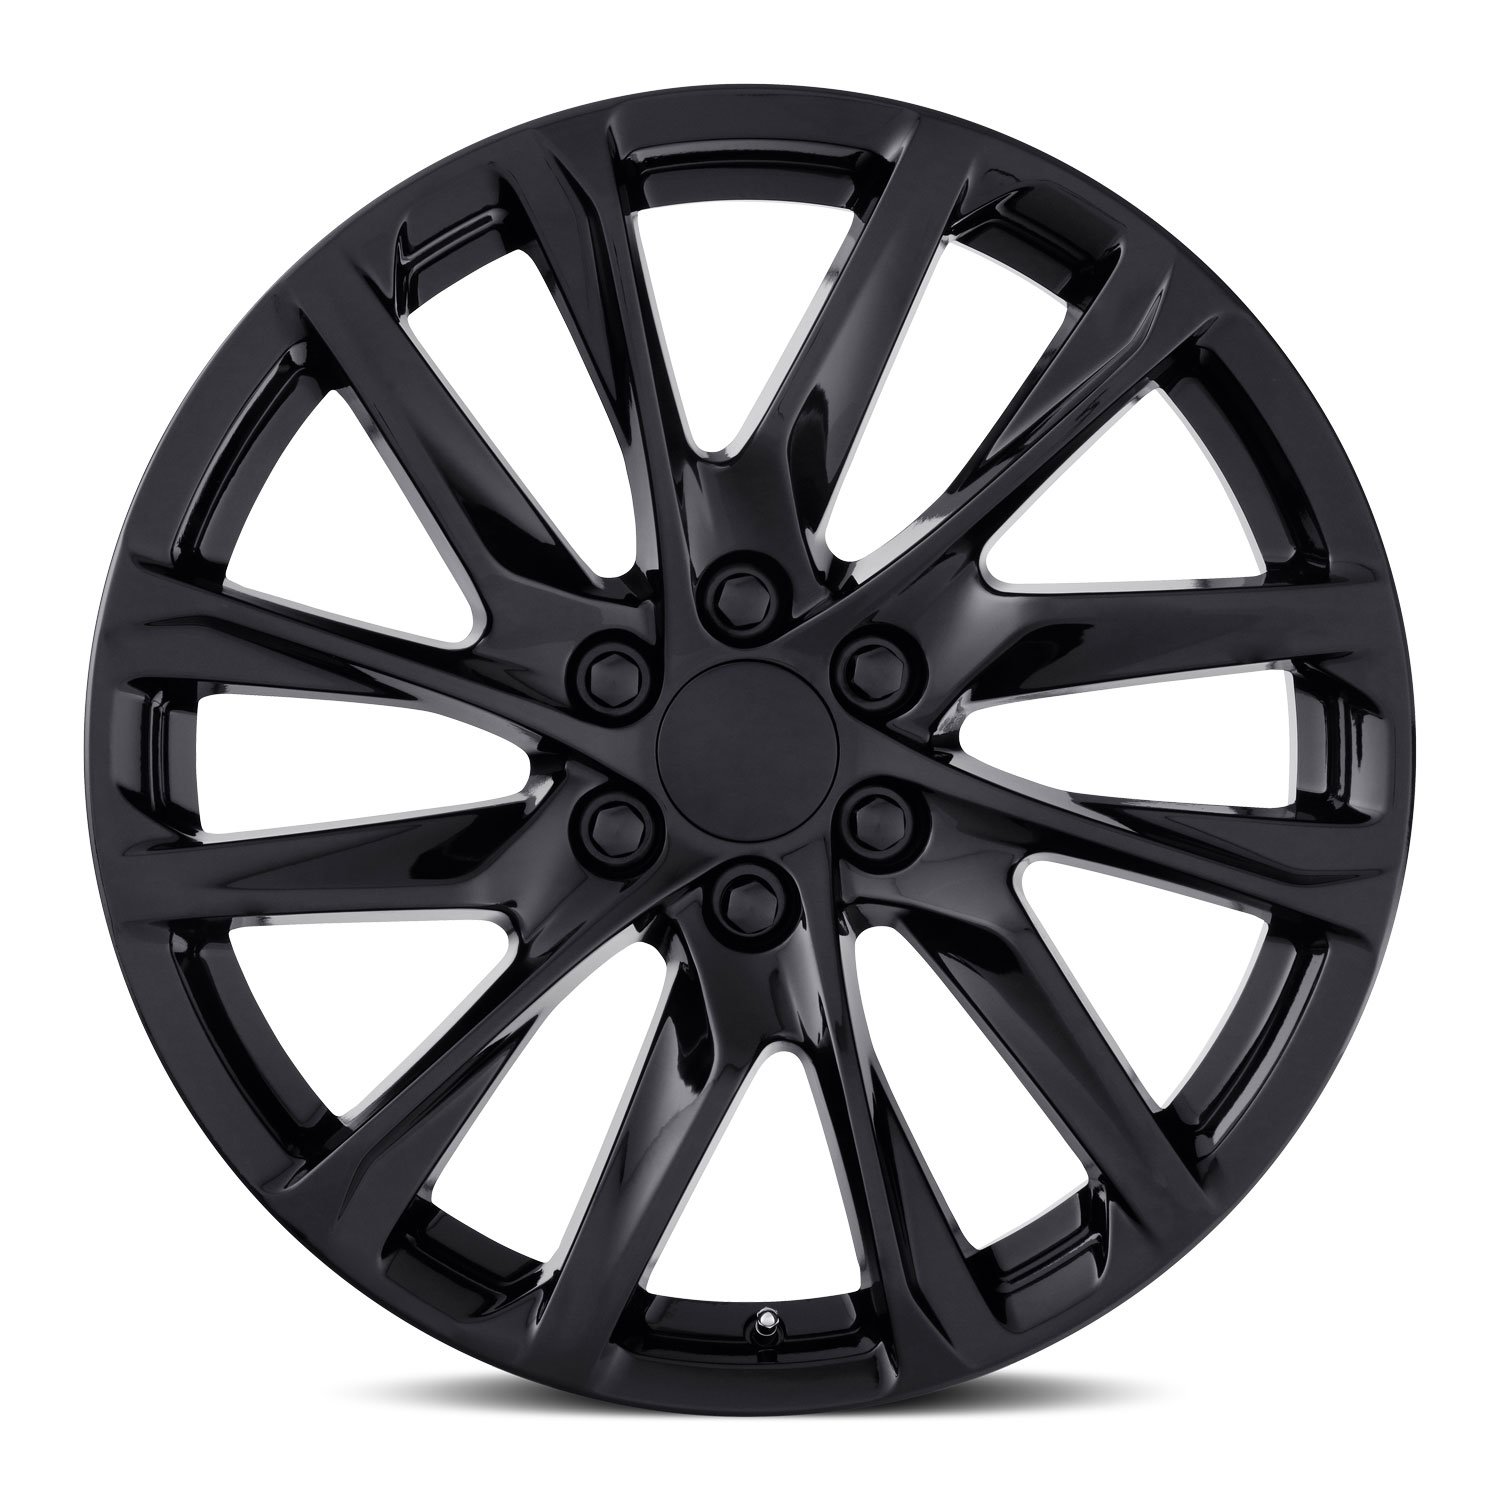 FR98-2290-6lug-Gloss-Black-02-GMC-Escalade-12-spoke-factory-reproductions-wheels-rims-face-1500